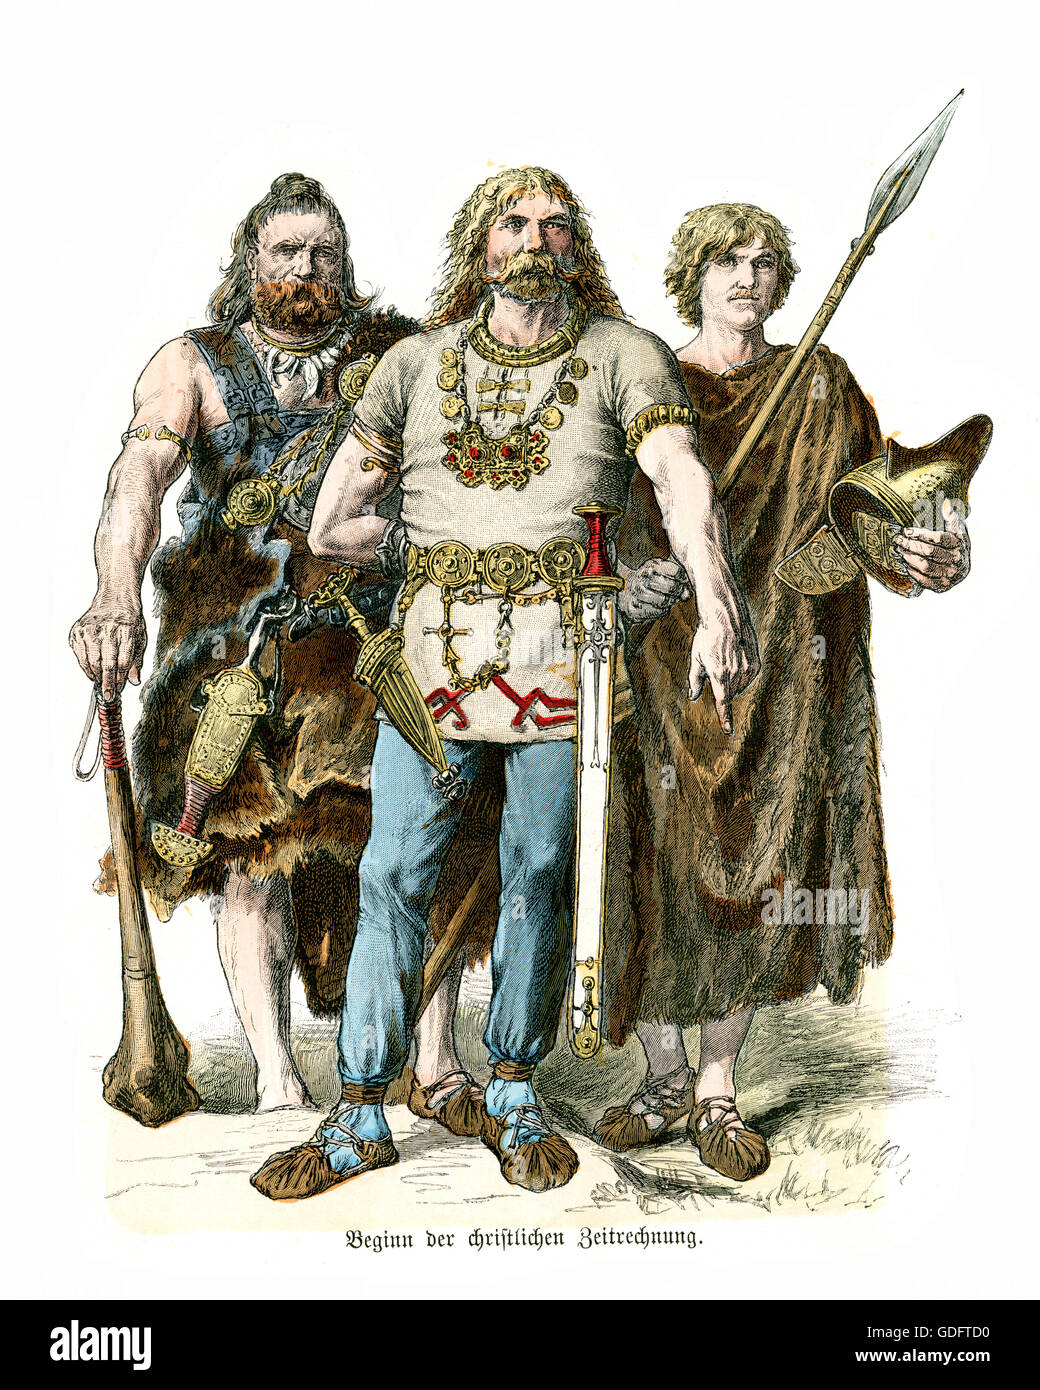 Fantasia feminino de viking bárbaro - Barbarian Viking Womens Costume